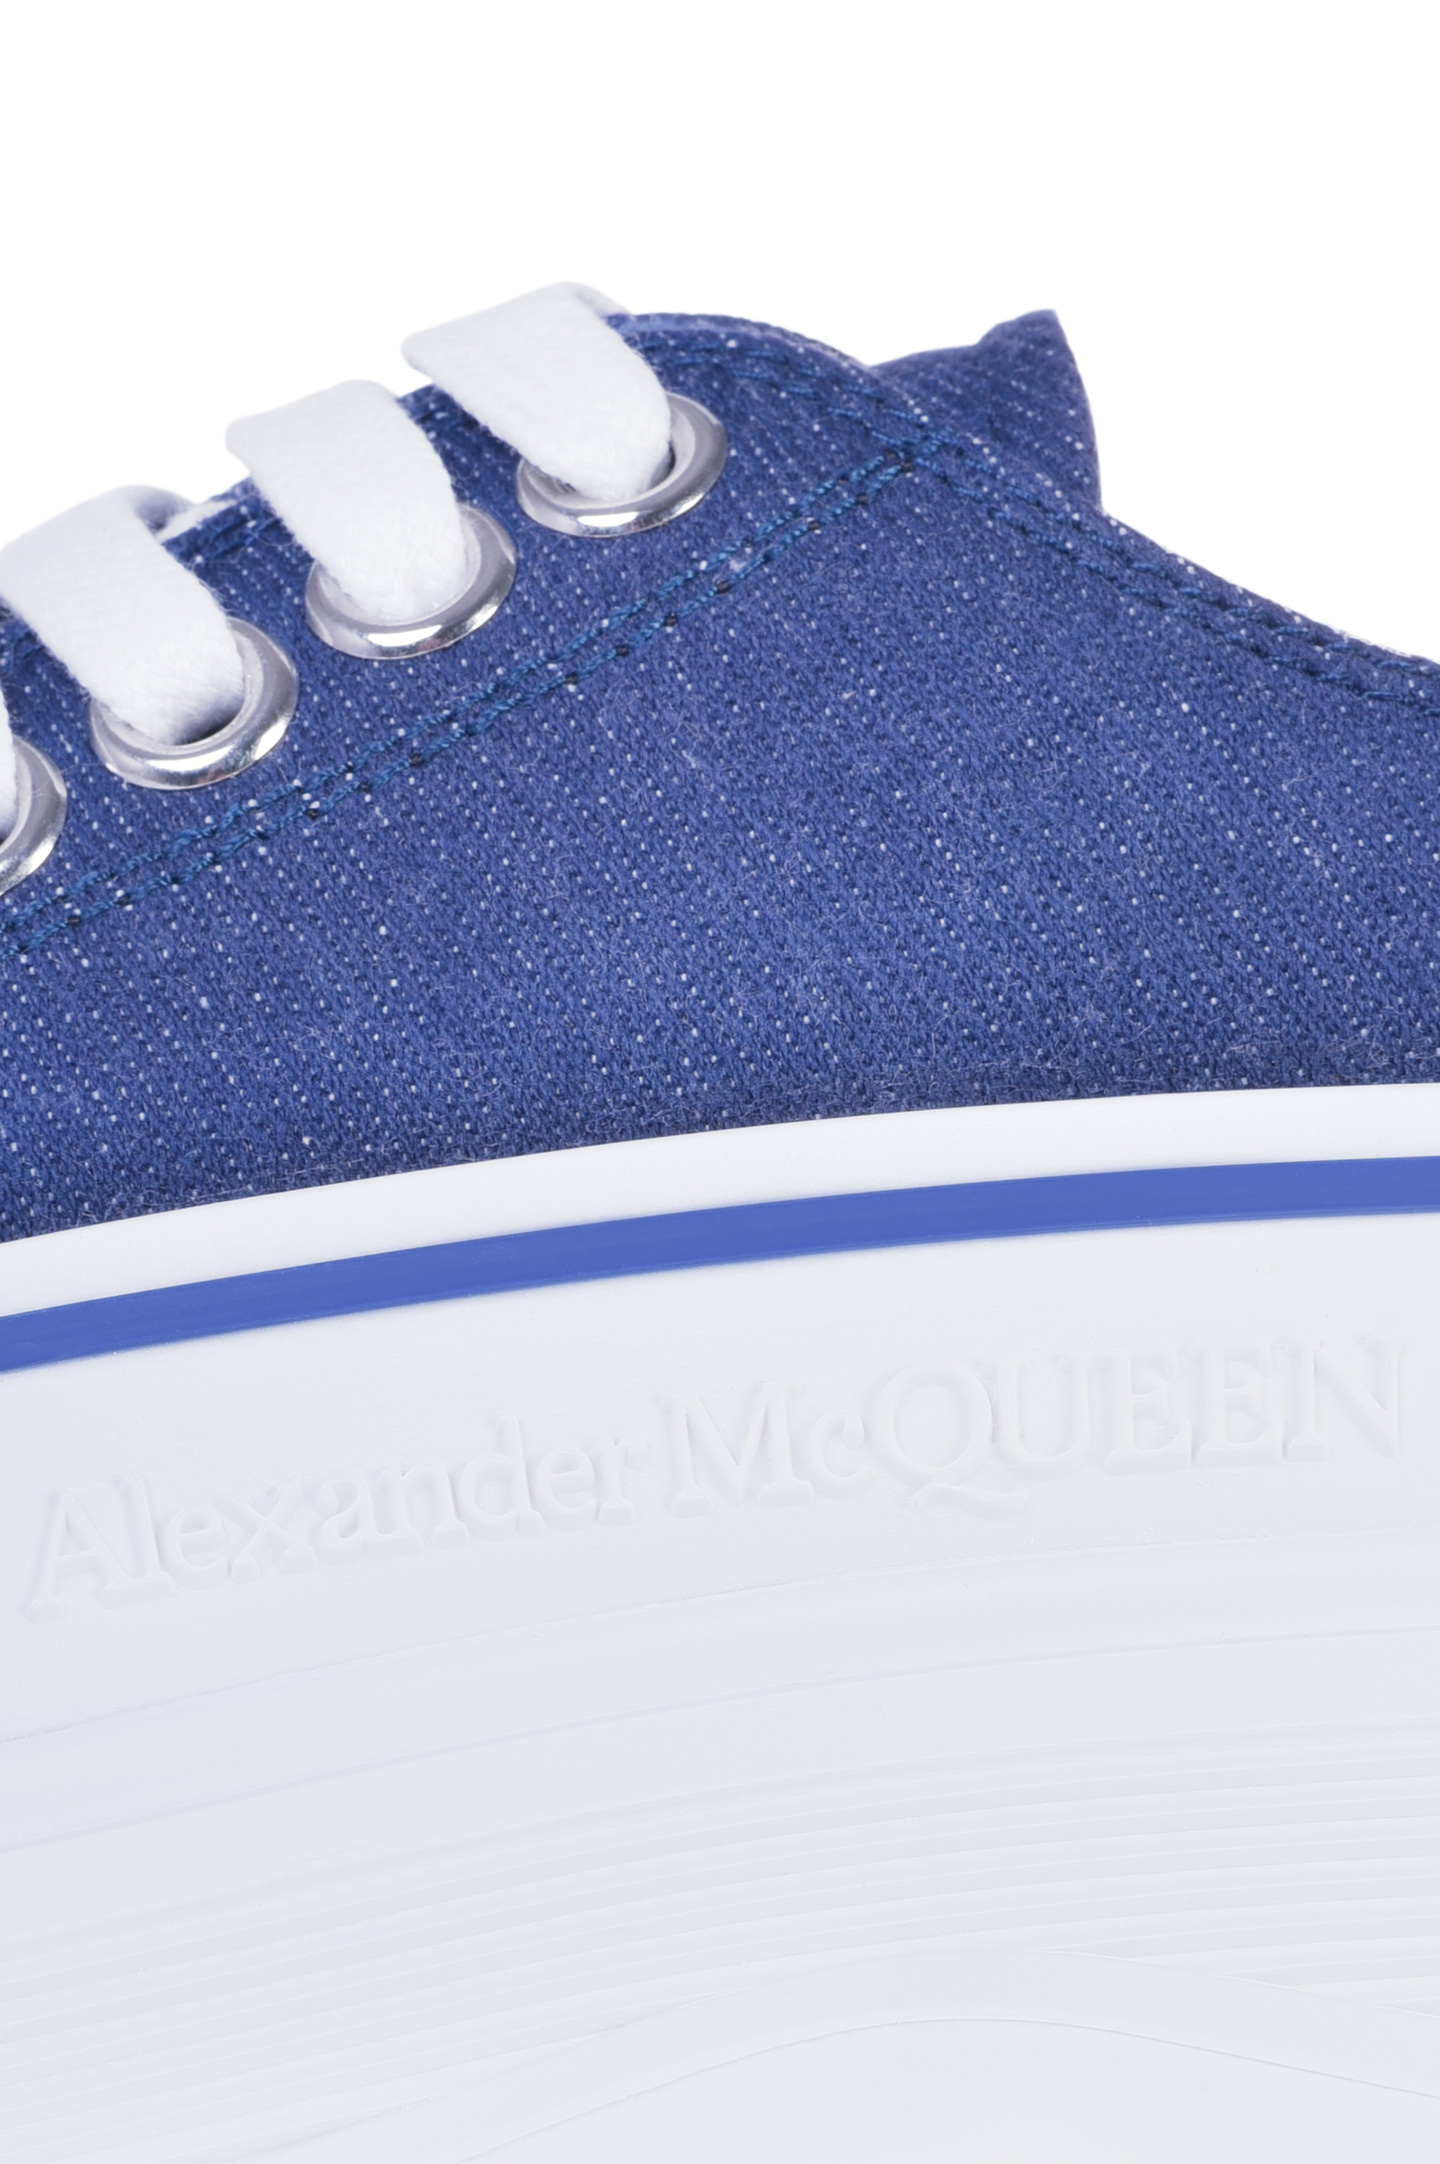 Ботинки ALEXANDER MCQUEEN 611705 W4PD1, цвет: Синий, Женский